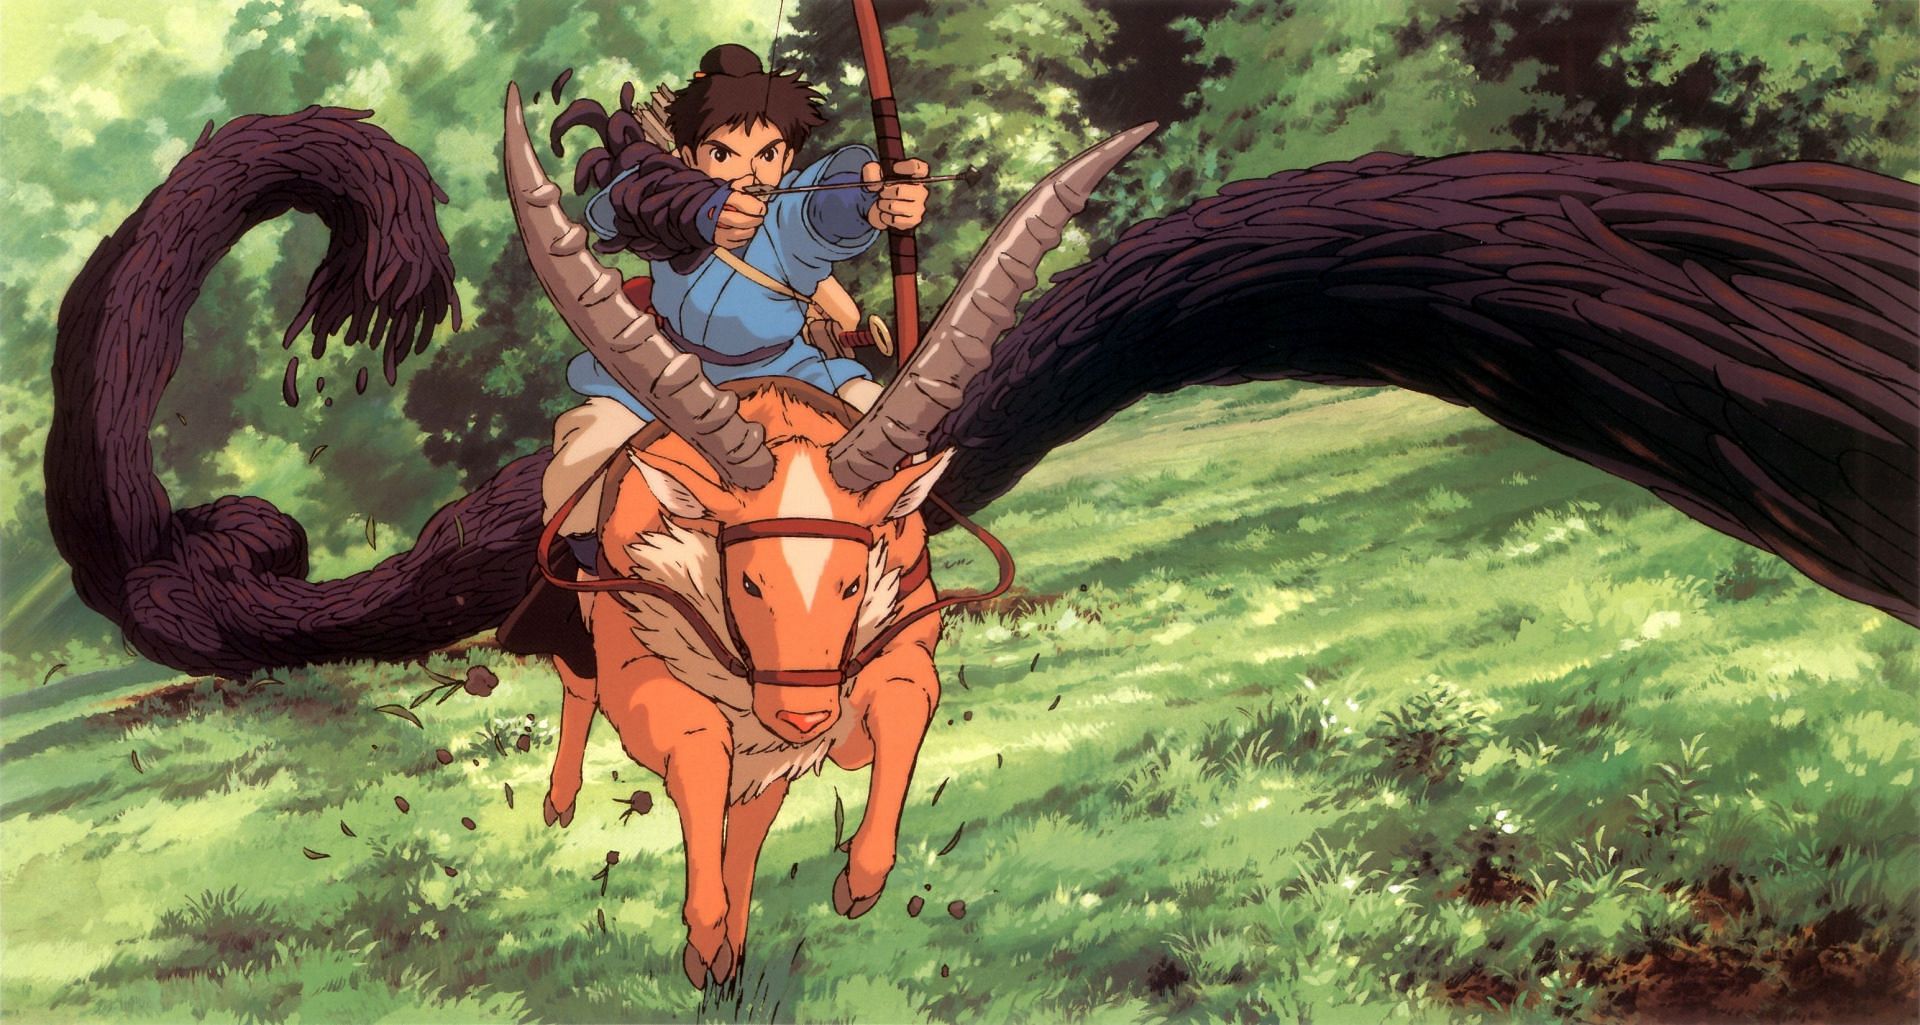 Ashitaka trying to kill the boar monster (Image via Studio Ghibli)